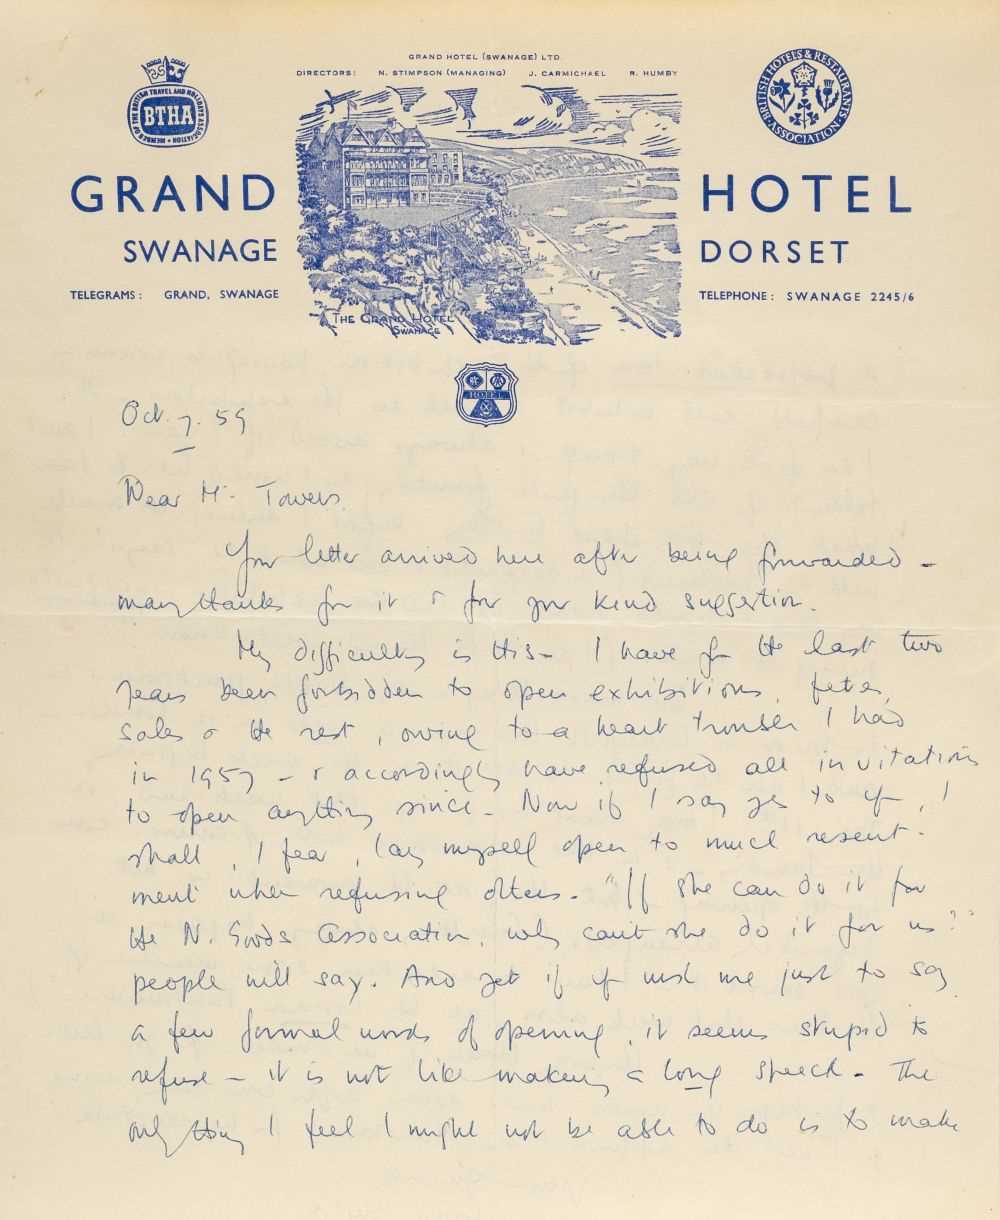 Lot 589 - Blyton (Enid, 1897-1968). Autograph letter signed, 7 October 1959